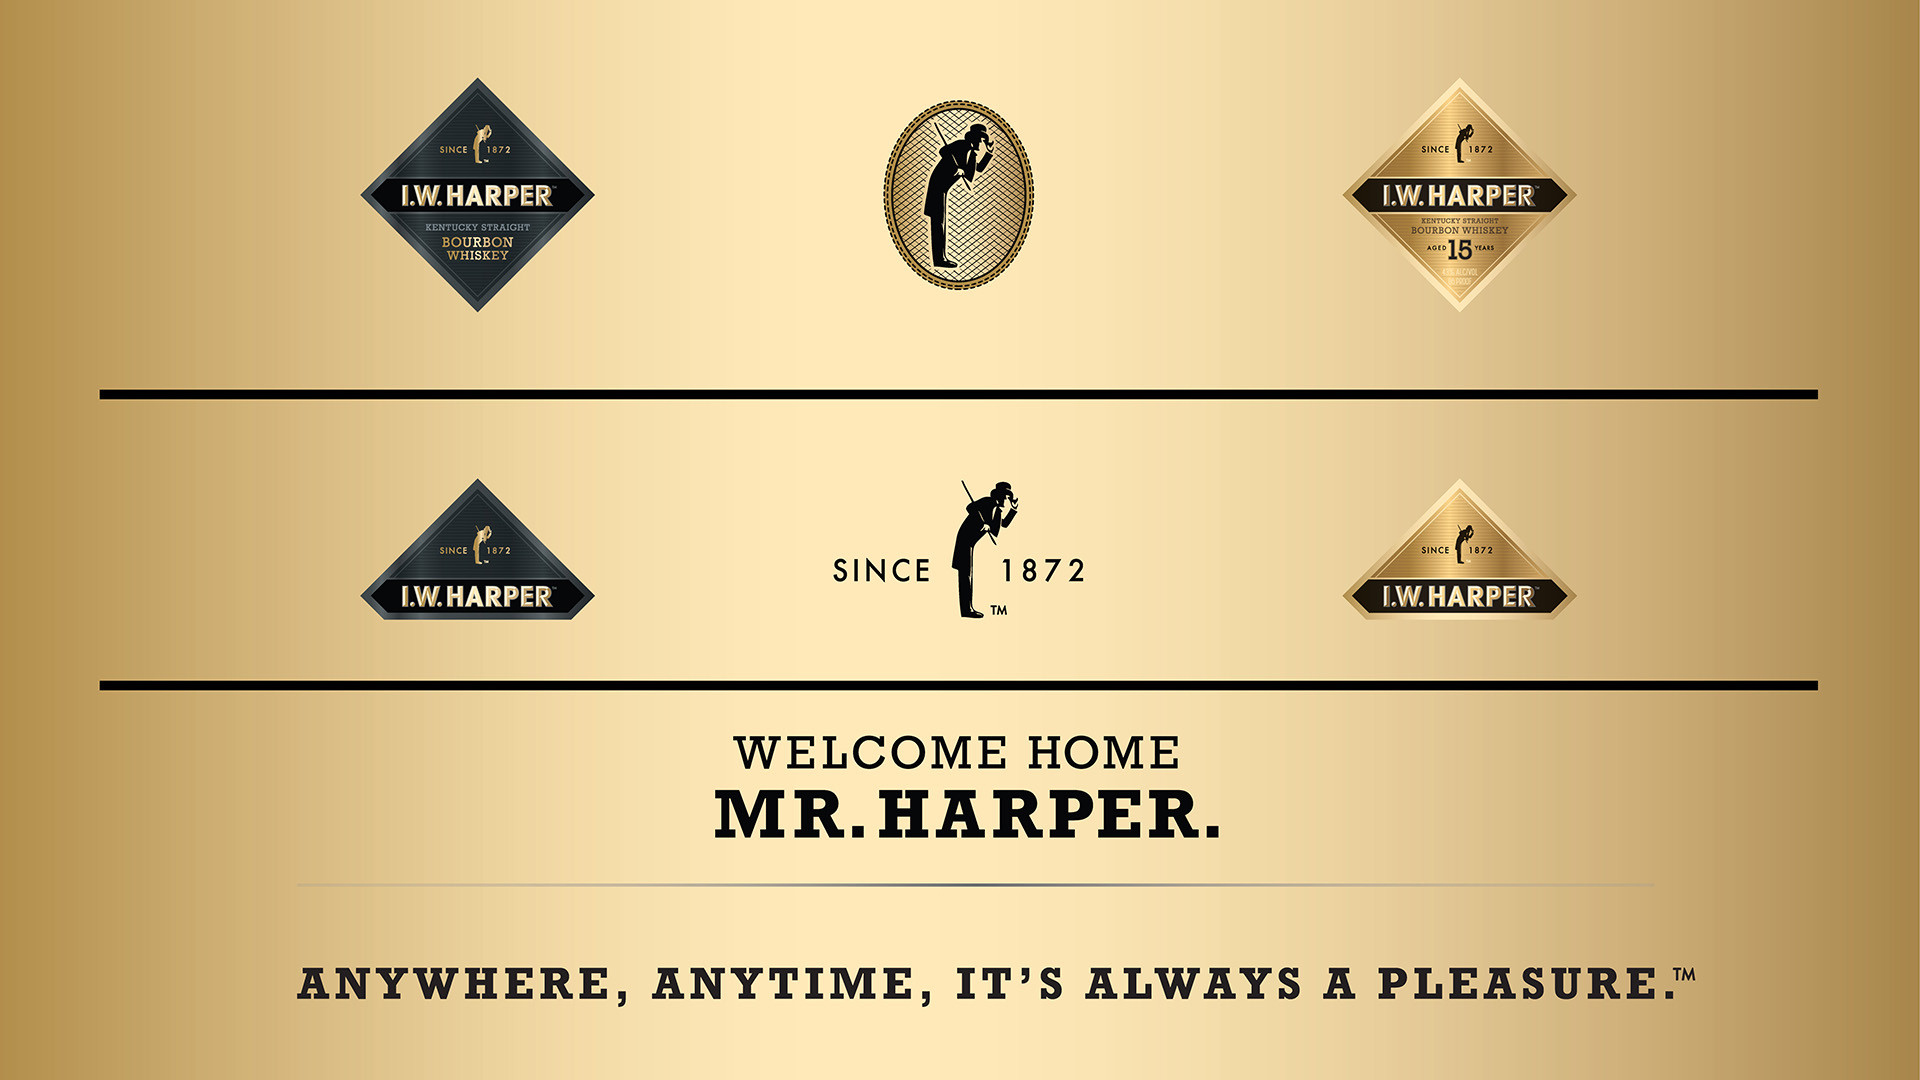 Oz Mfg. Company I.W. Harper Campaign Badges Brand Identity